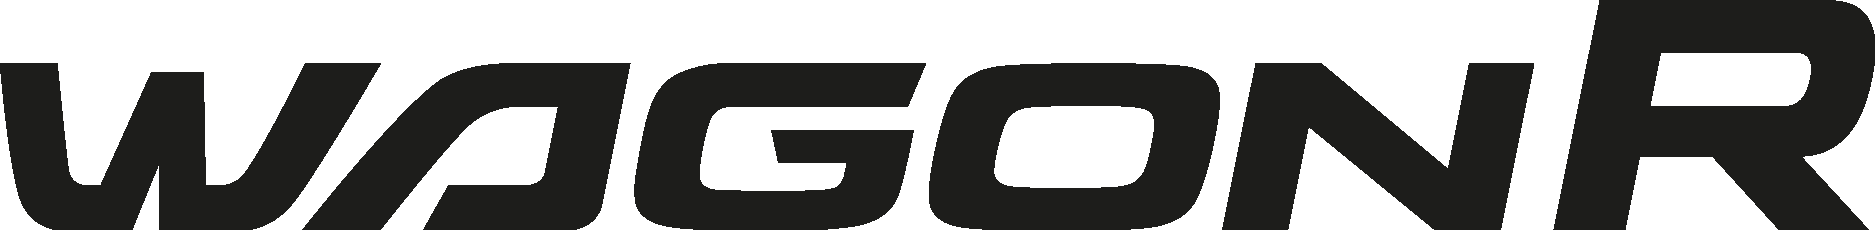 Suzuki Alto Logo PNG Vectors Free Download